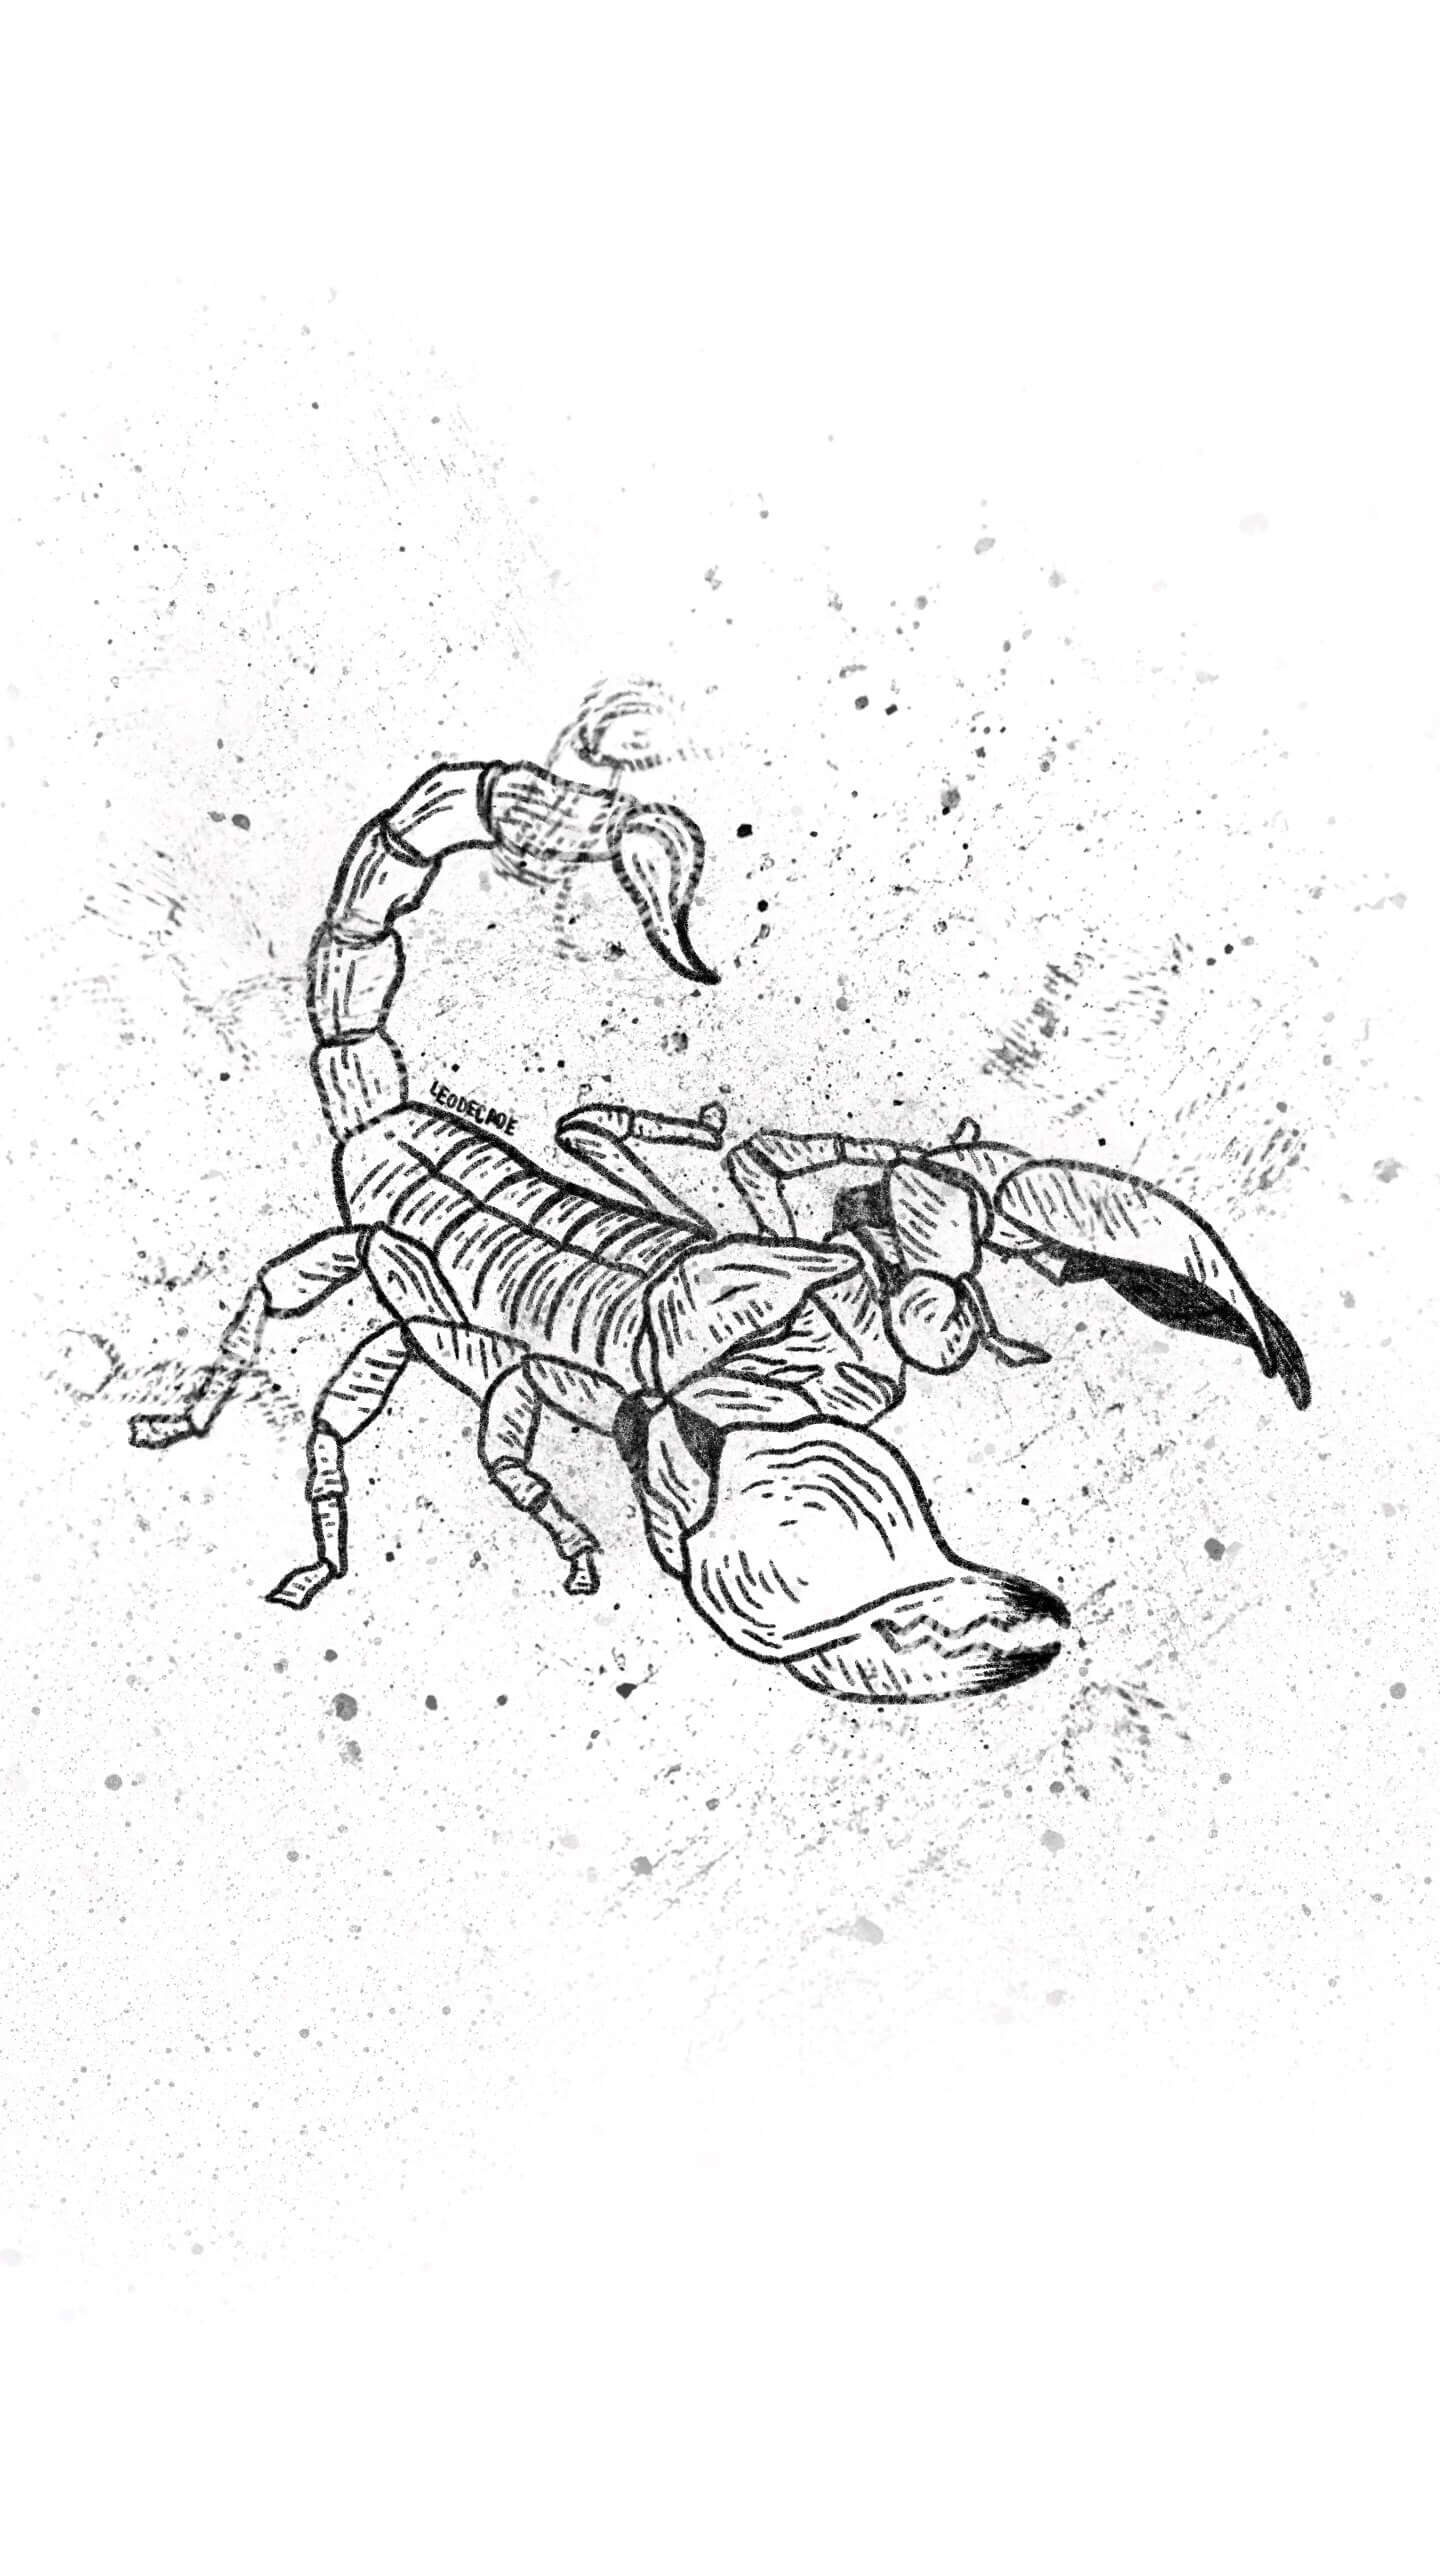 Скорпион стимпанк рисунок